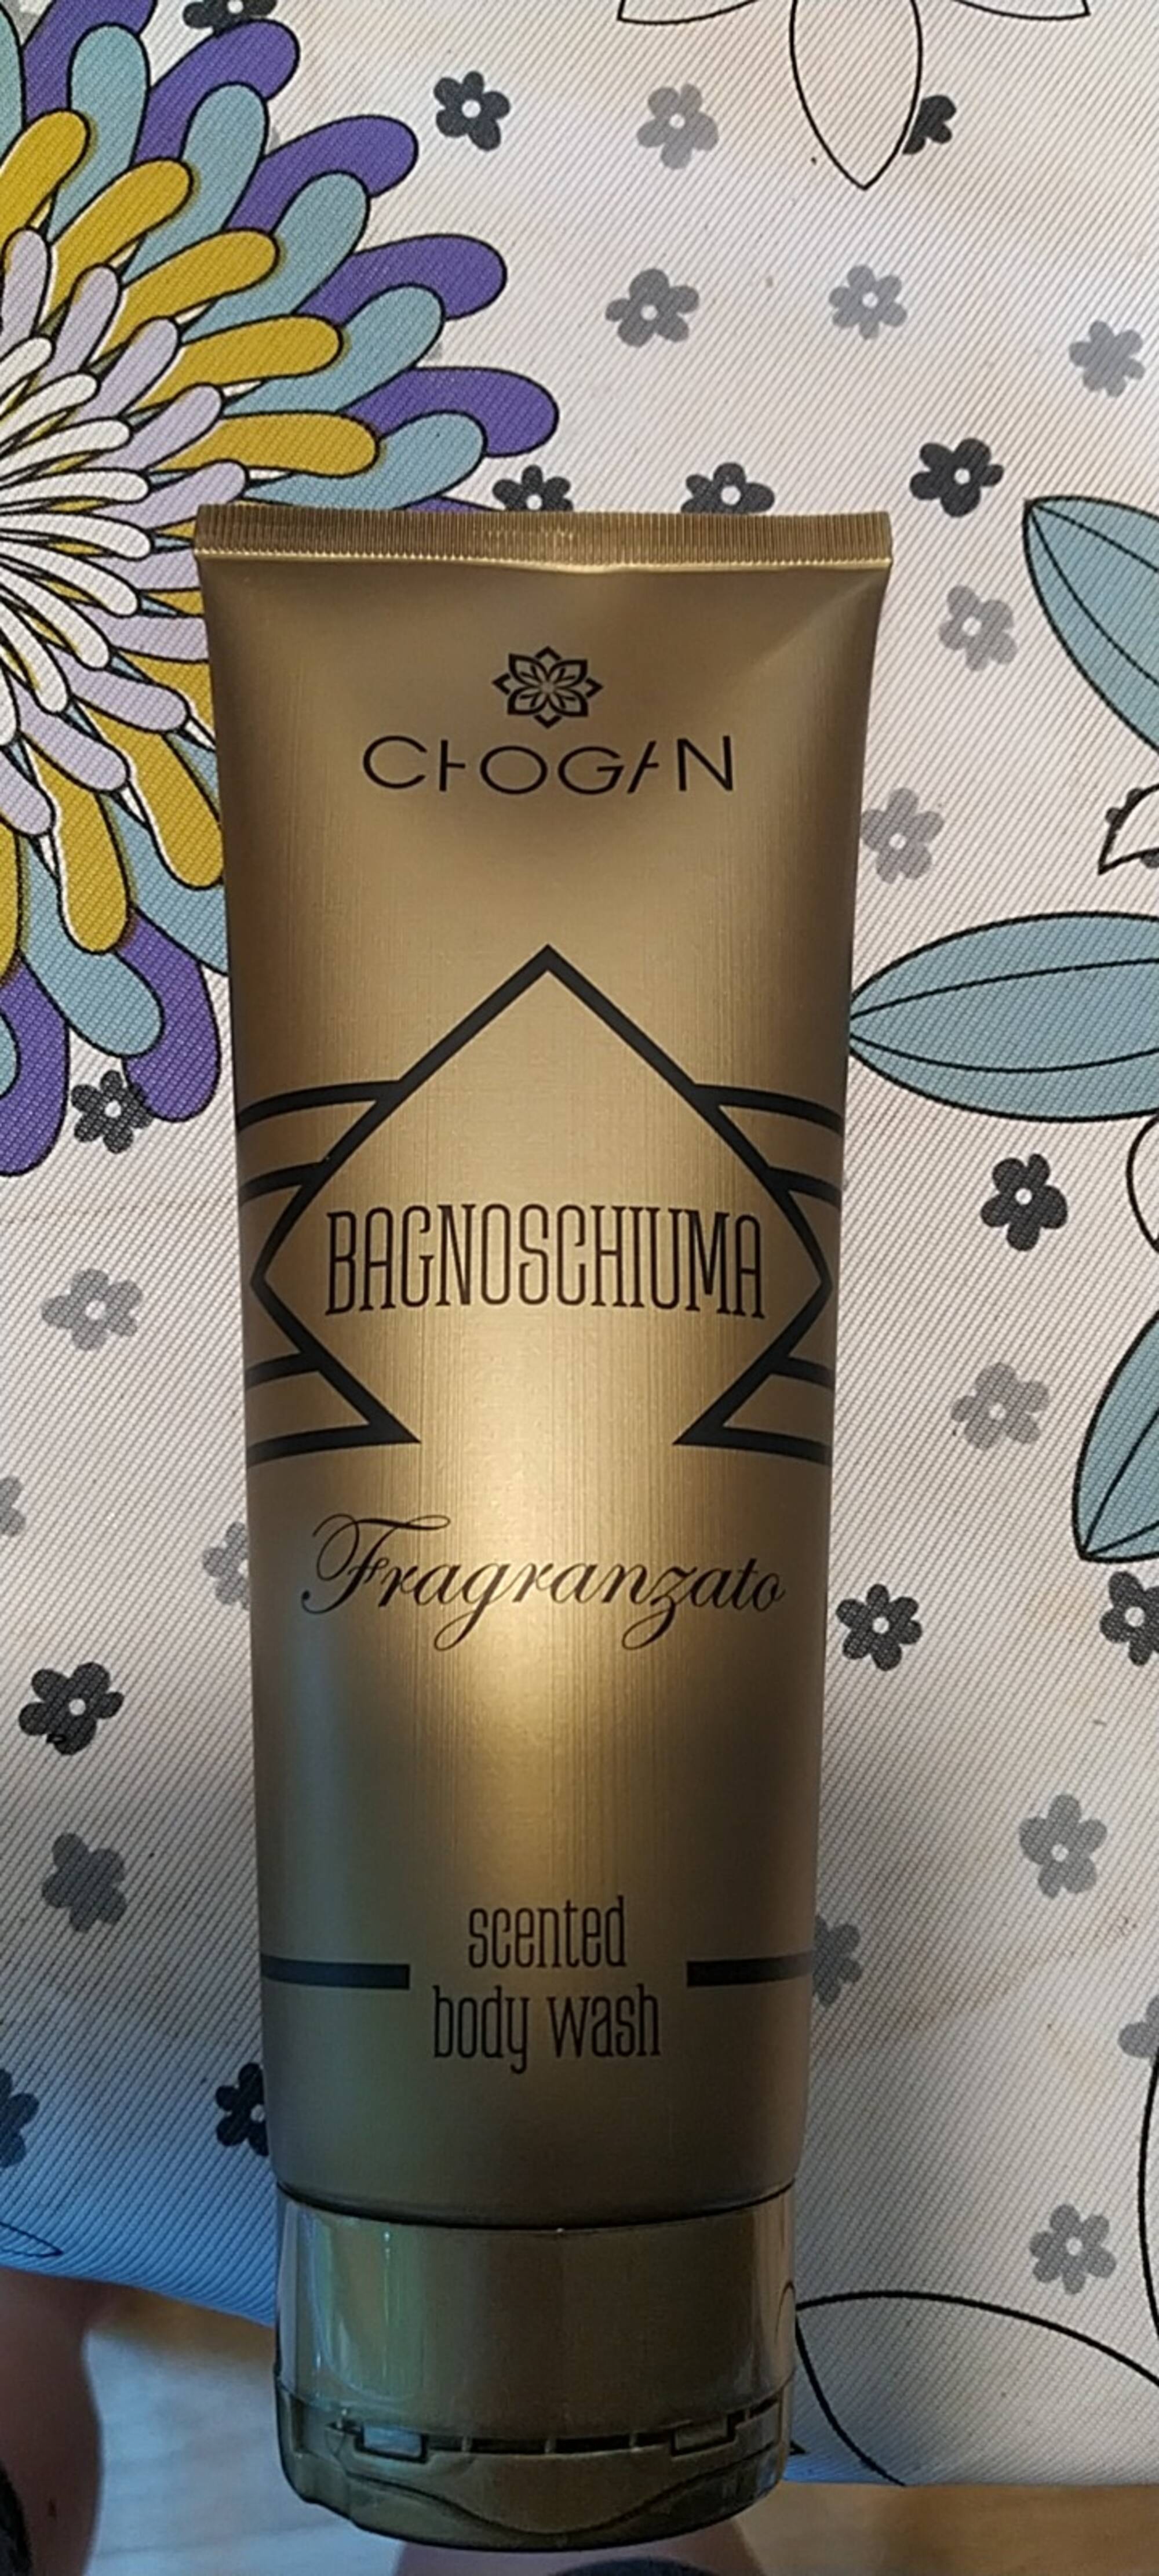 CHOGAN - Bagnoschiuma - Scented body wash